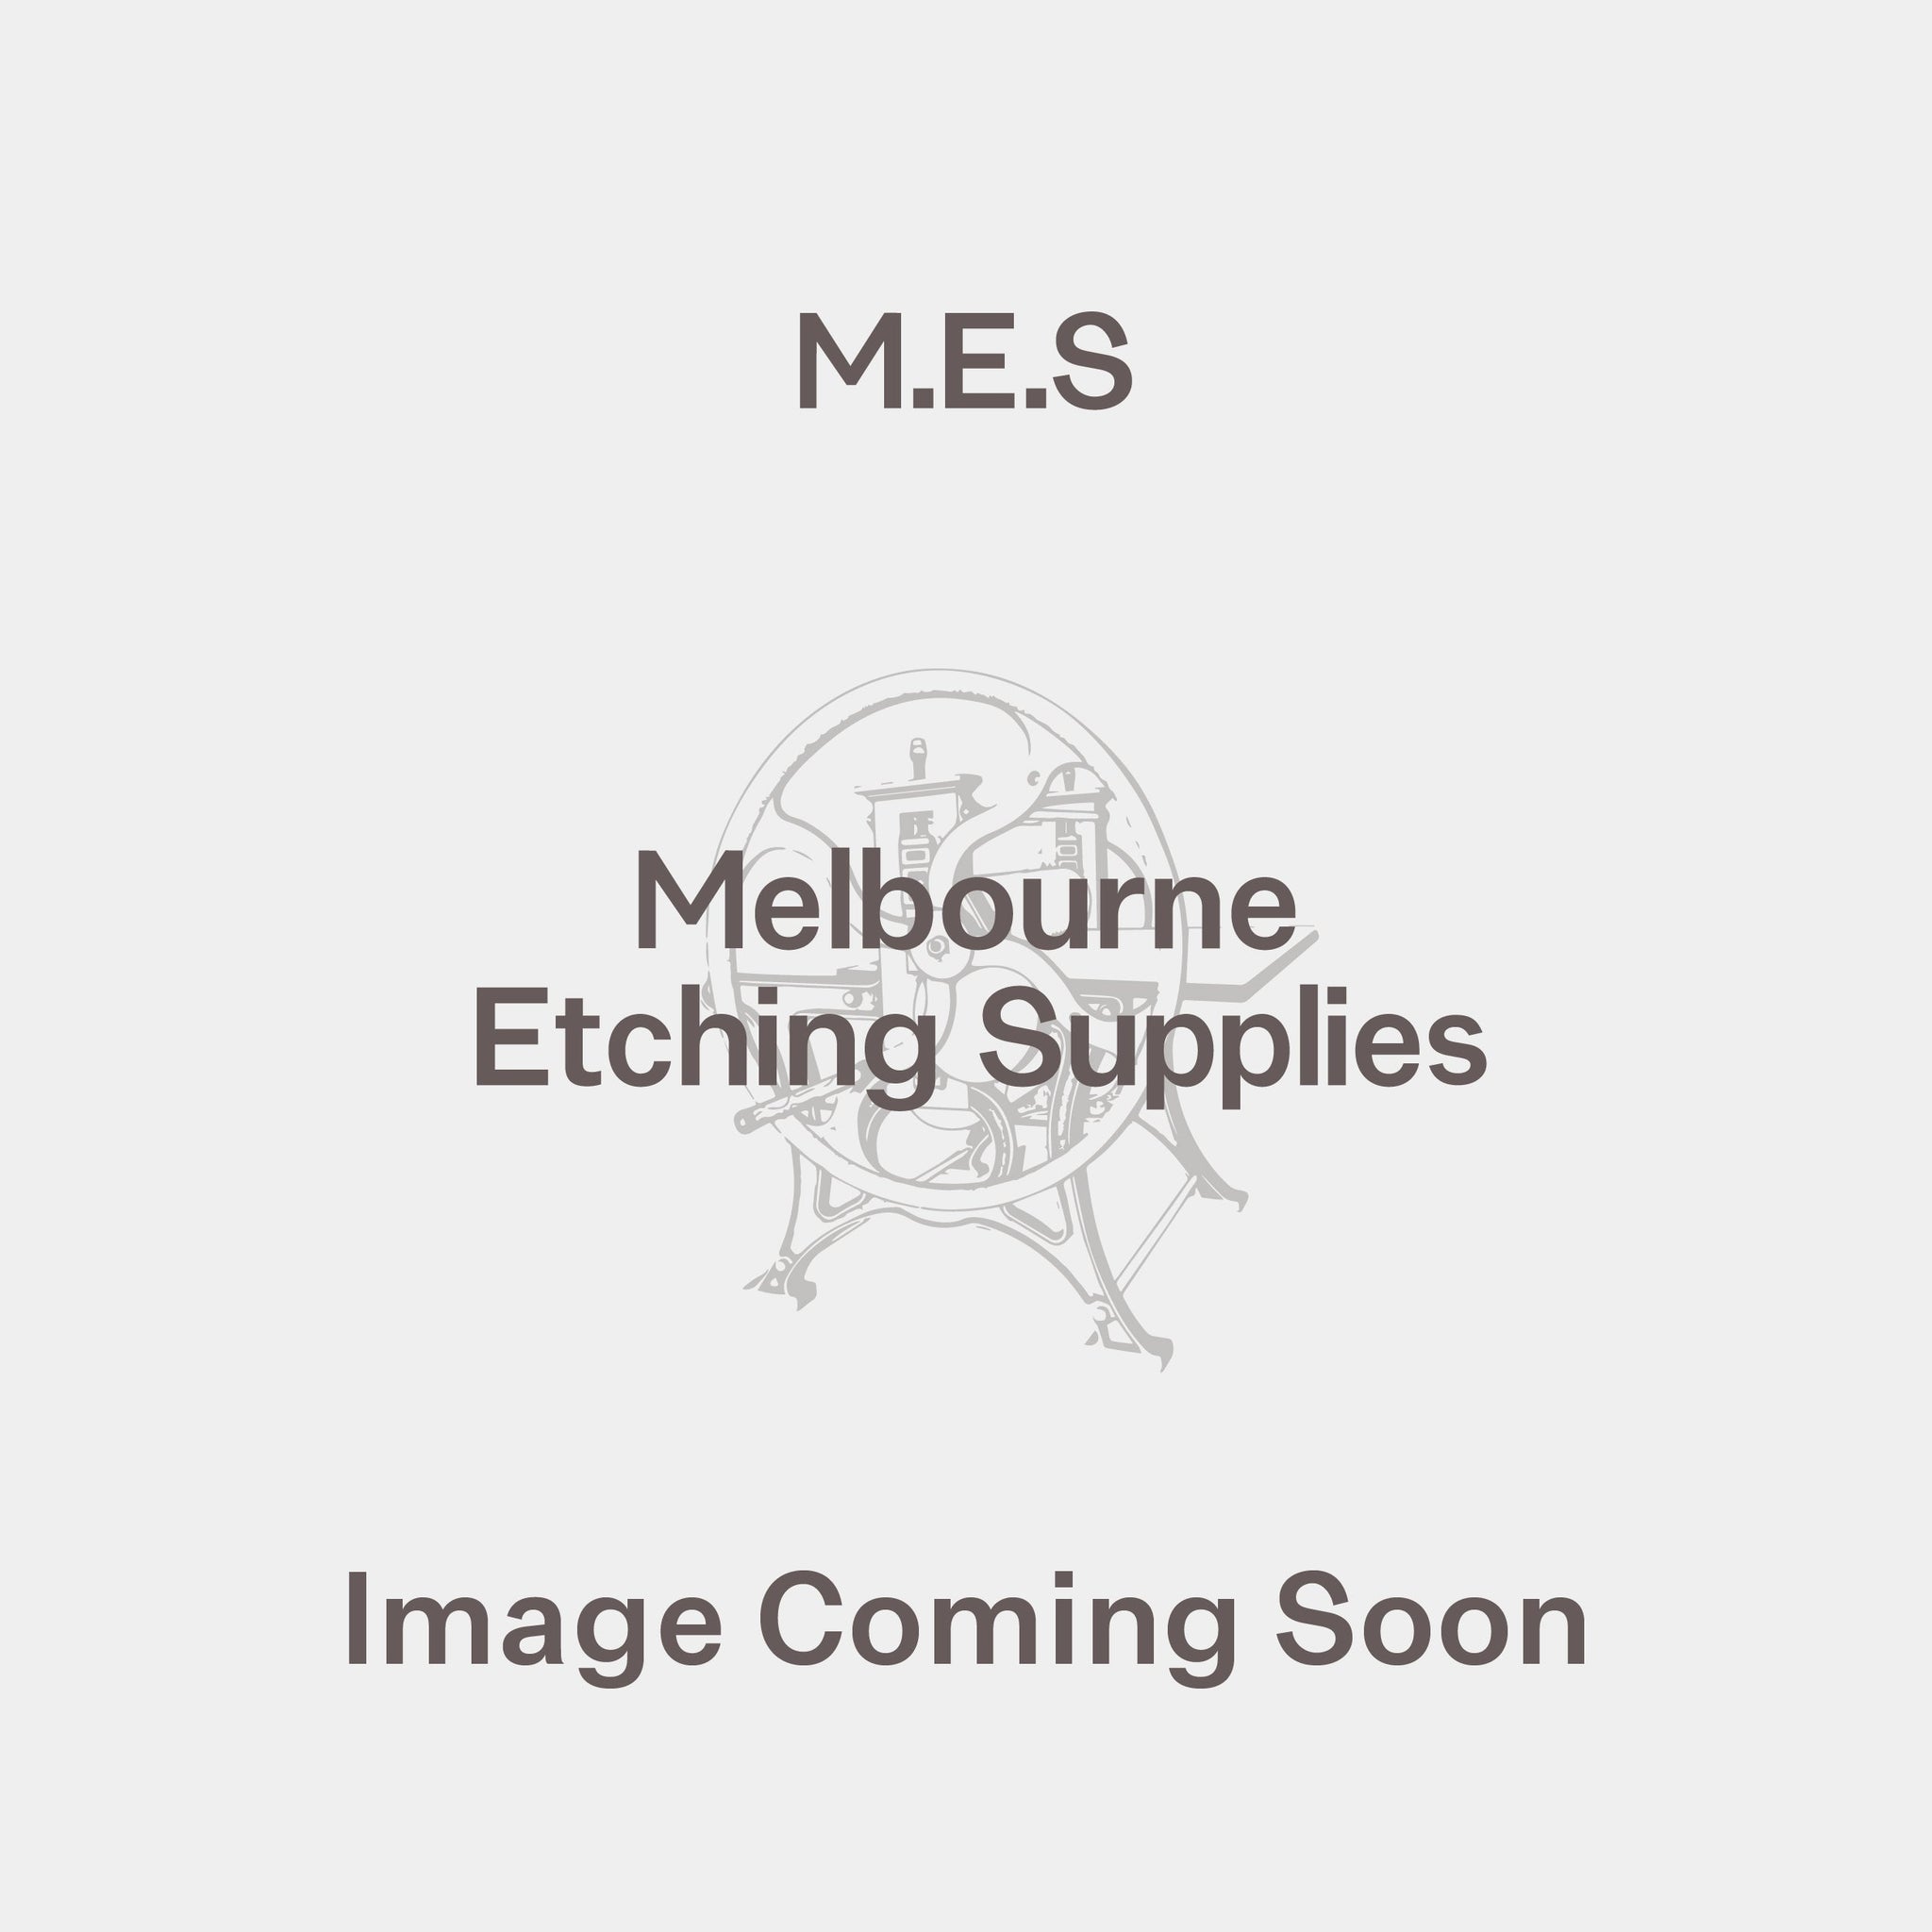 Shunsetsu 30gm - Melbourne Etching Supplies